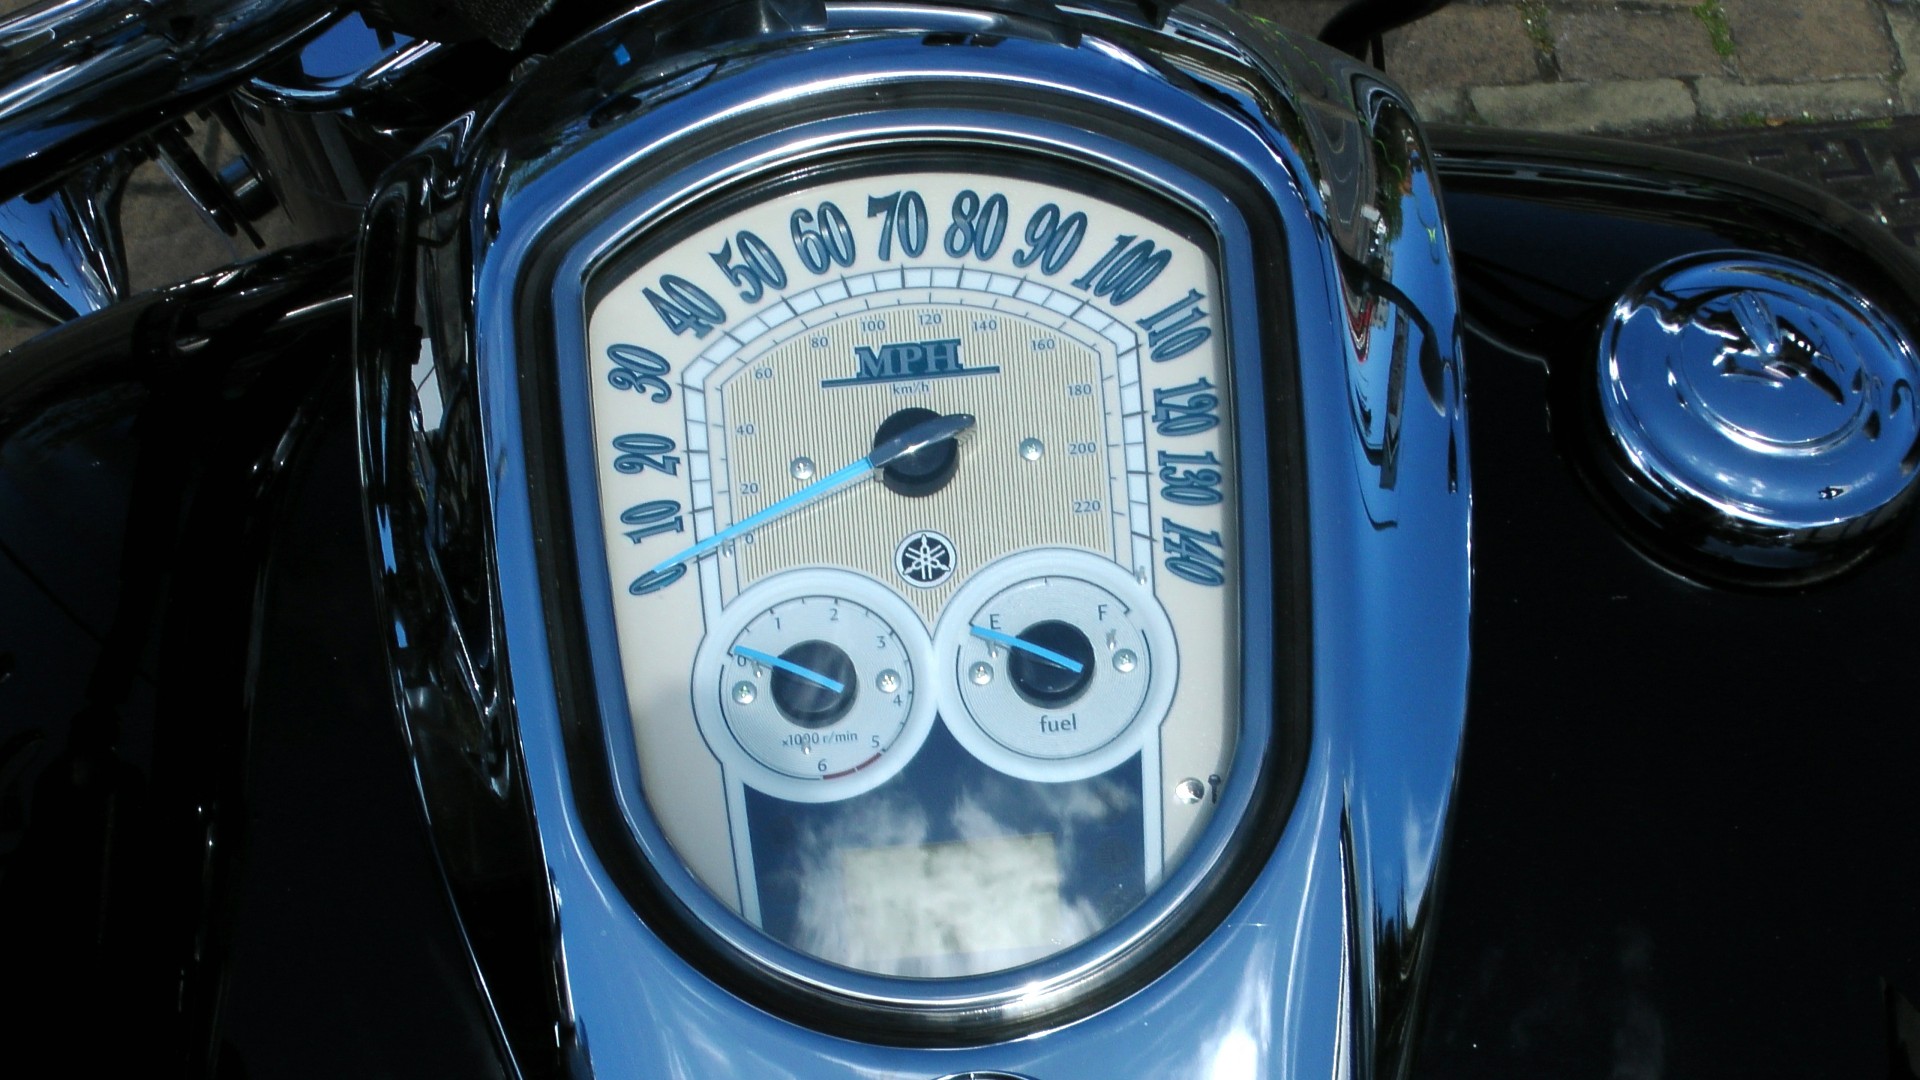 yamaha motorcycle fuel tank speedometer motorcycle engine yamaha free photo